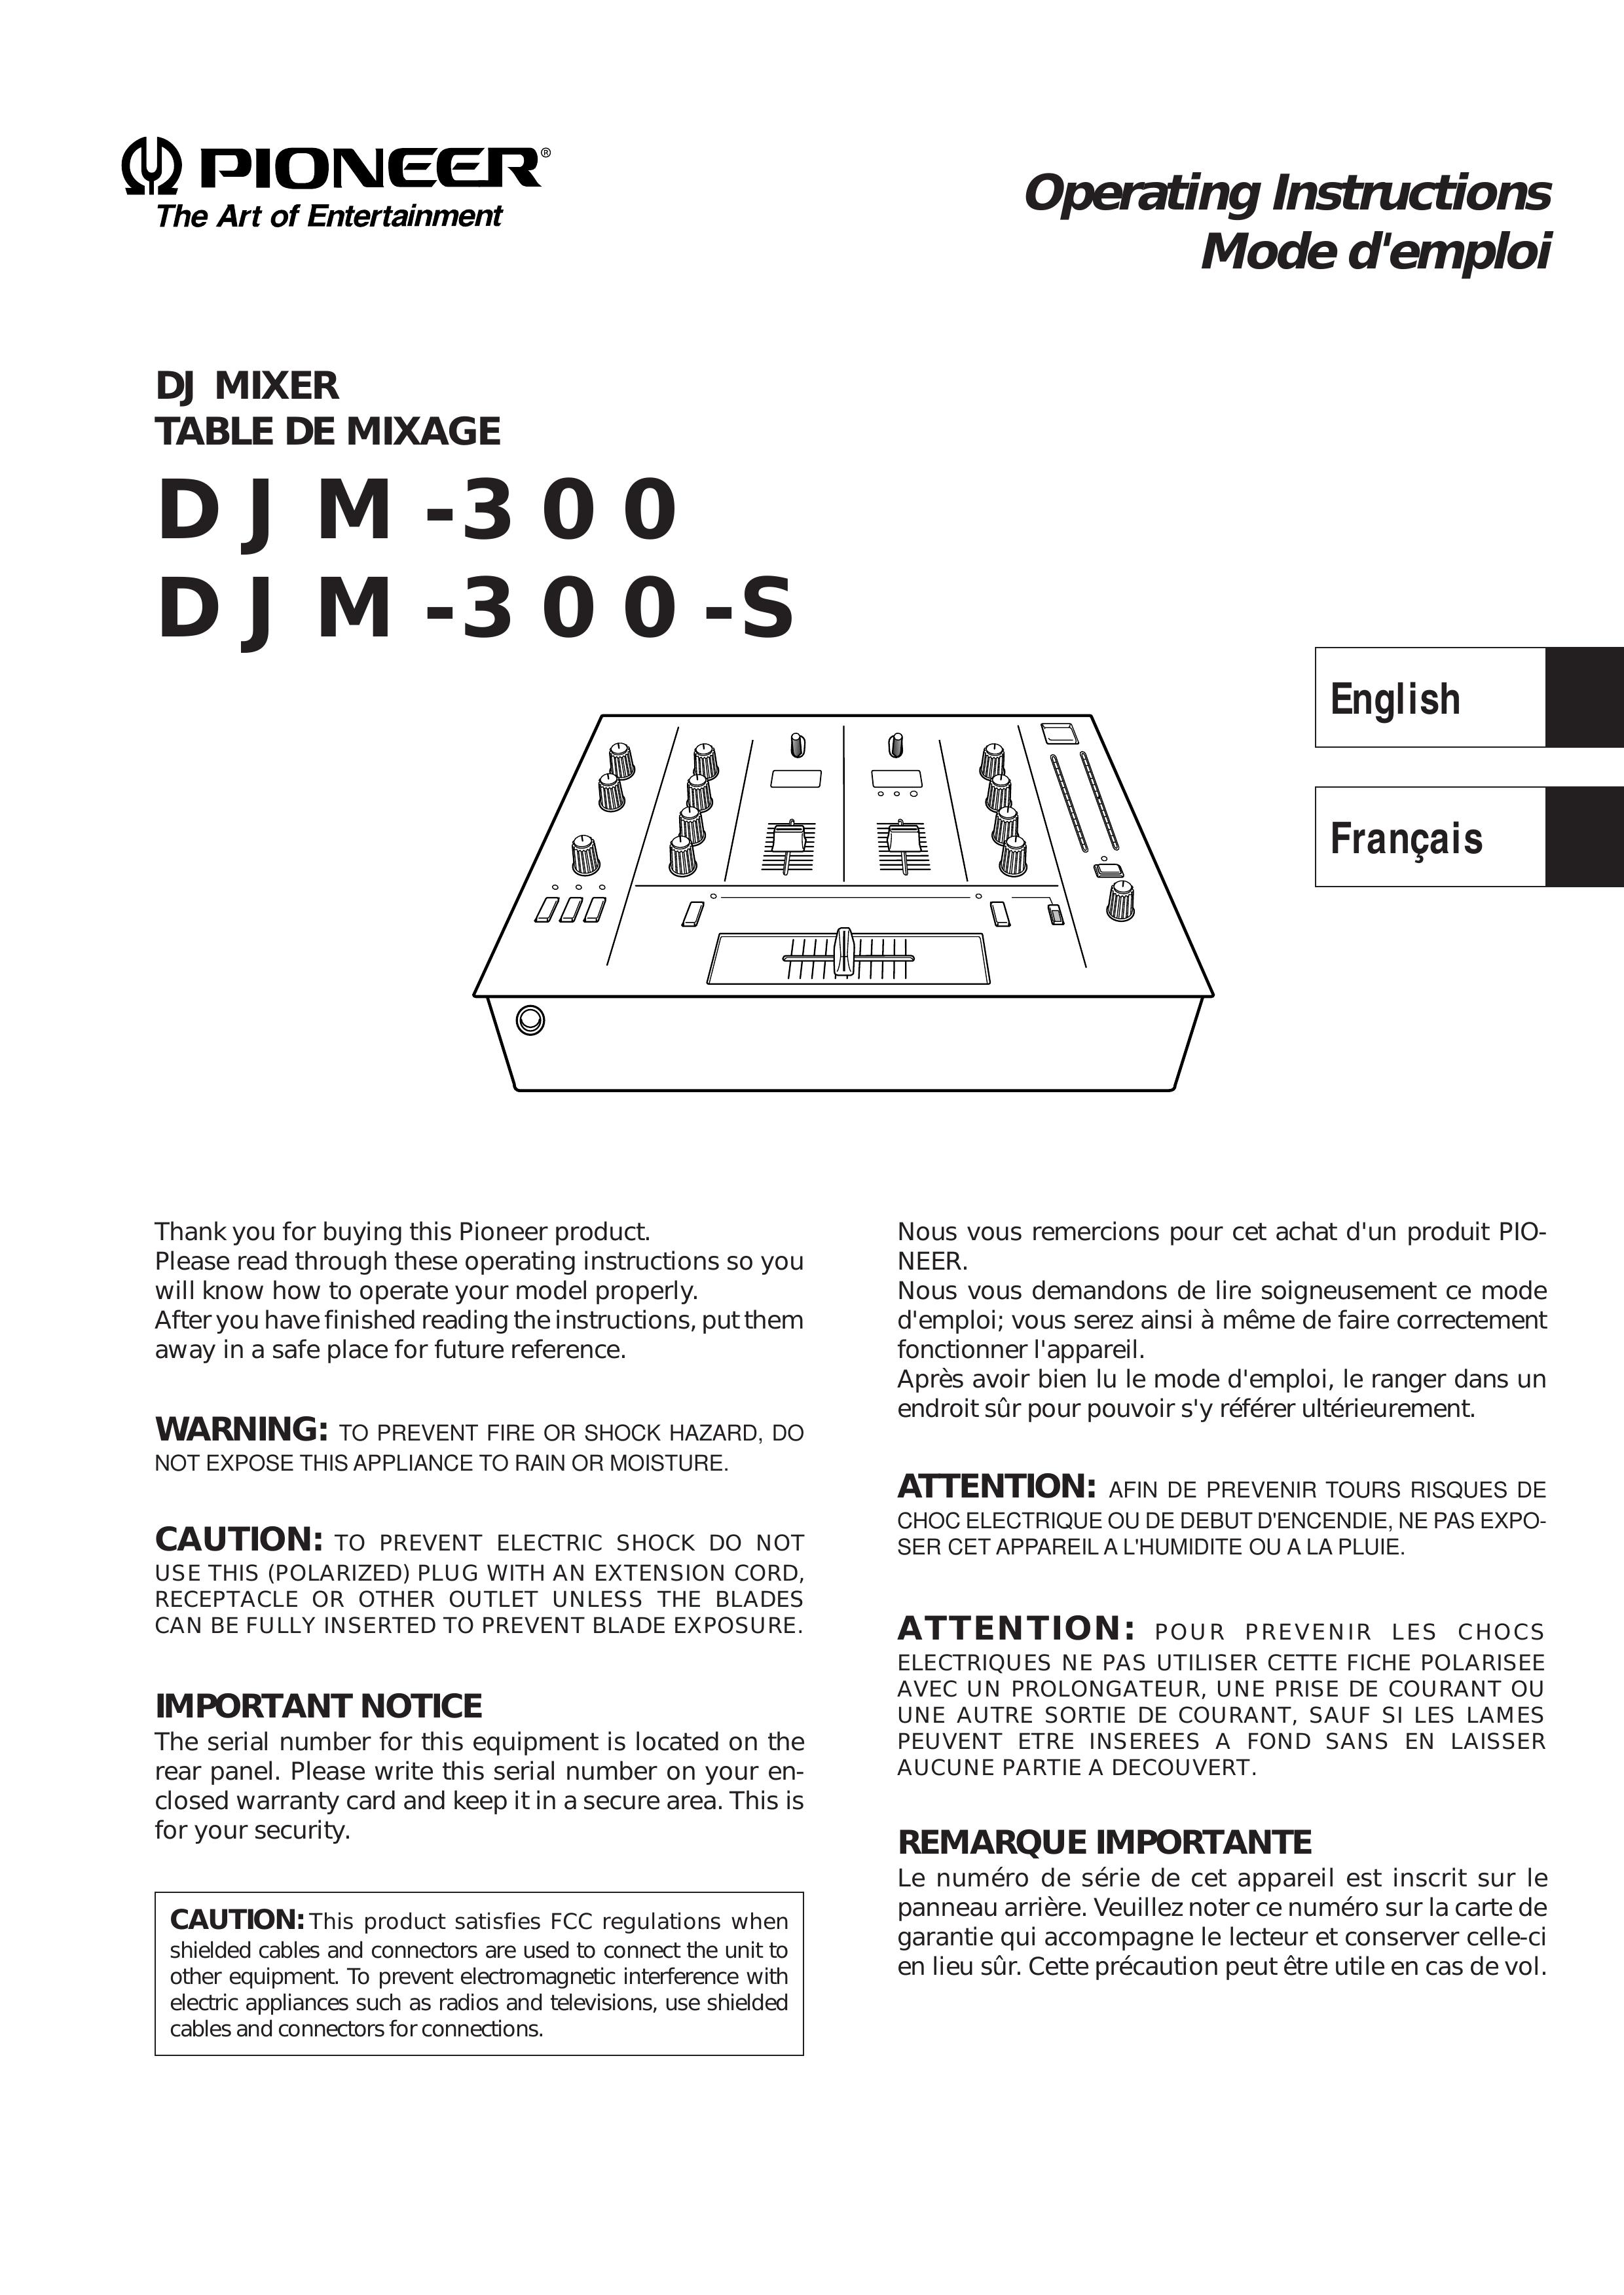 Pioneer DJM-300 Musical Instrument User Manual